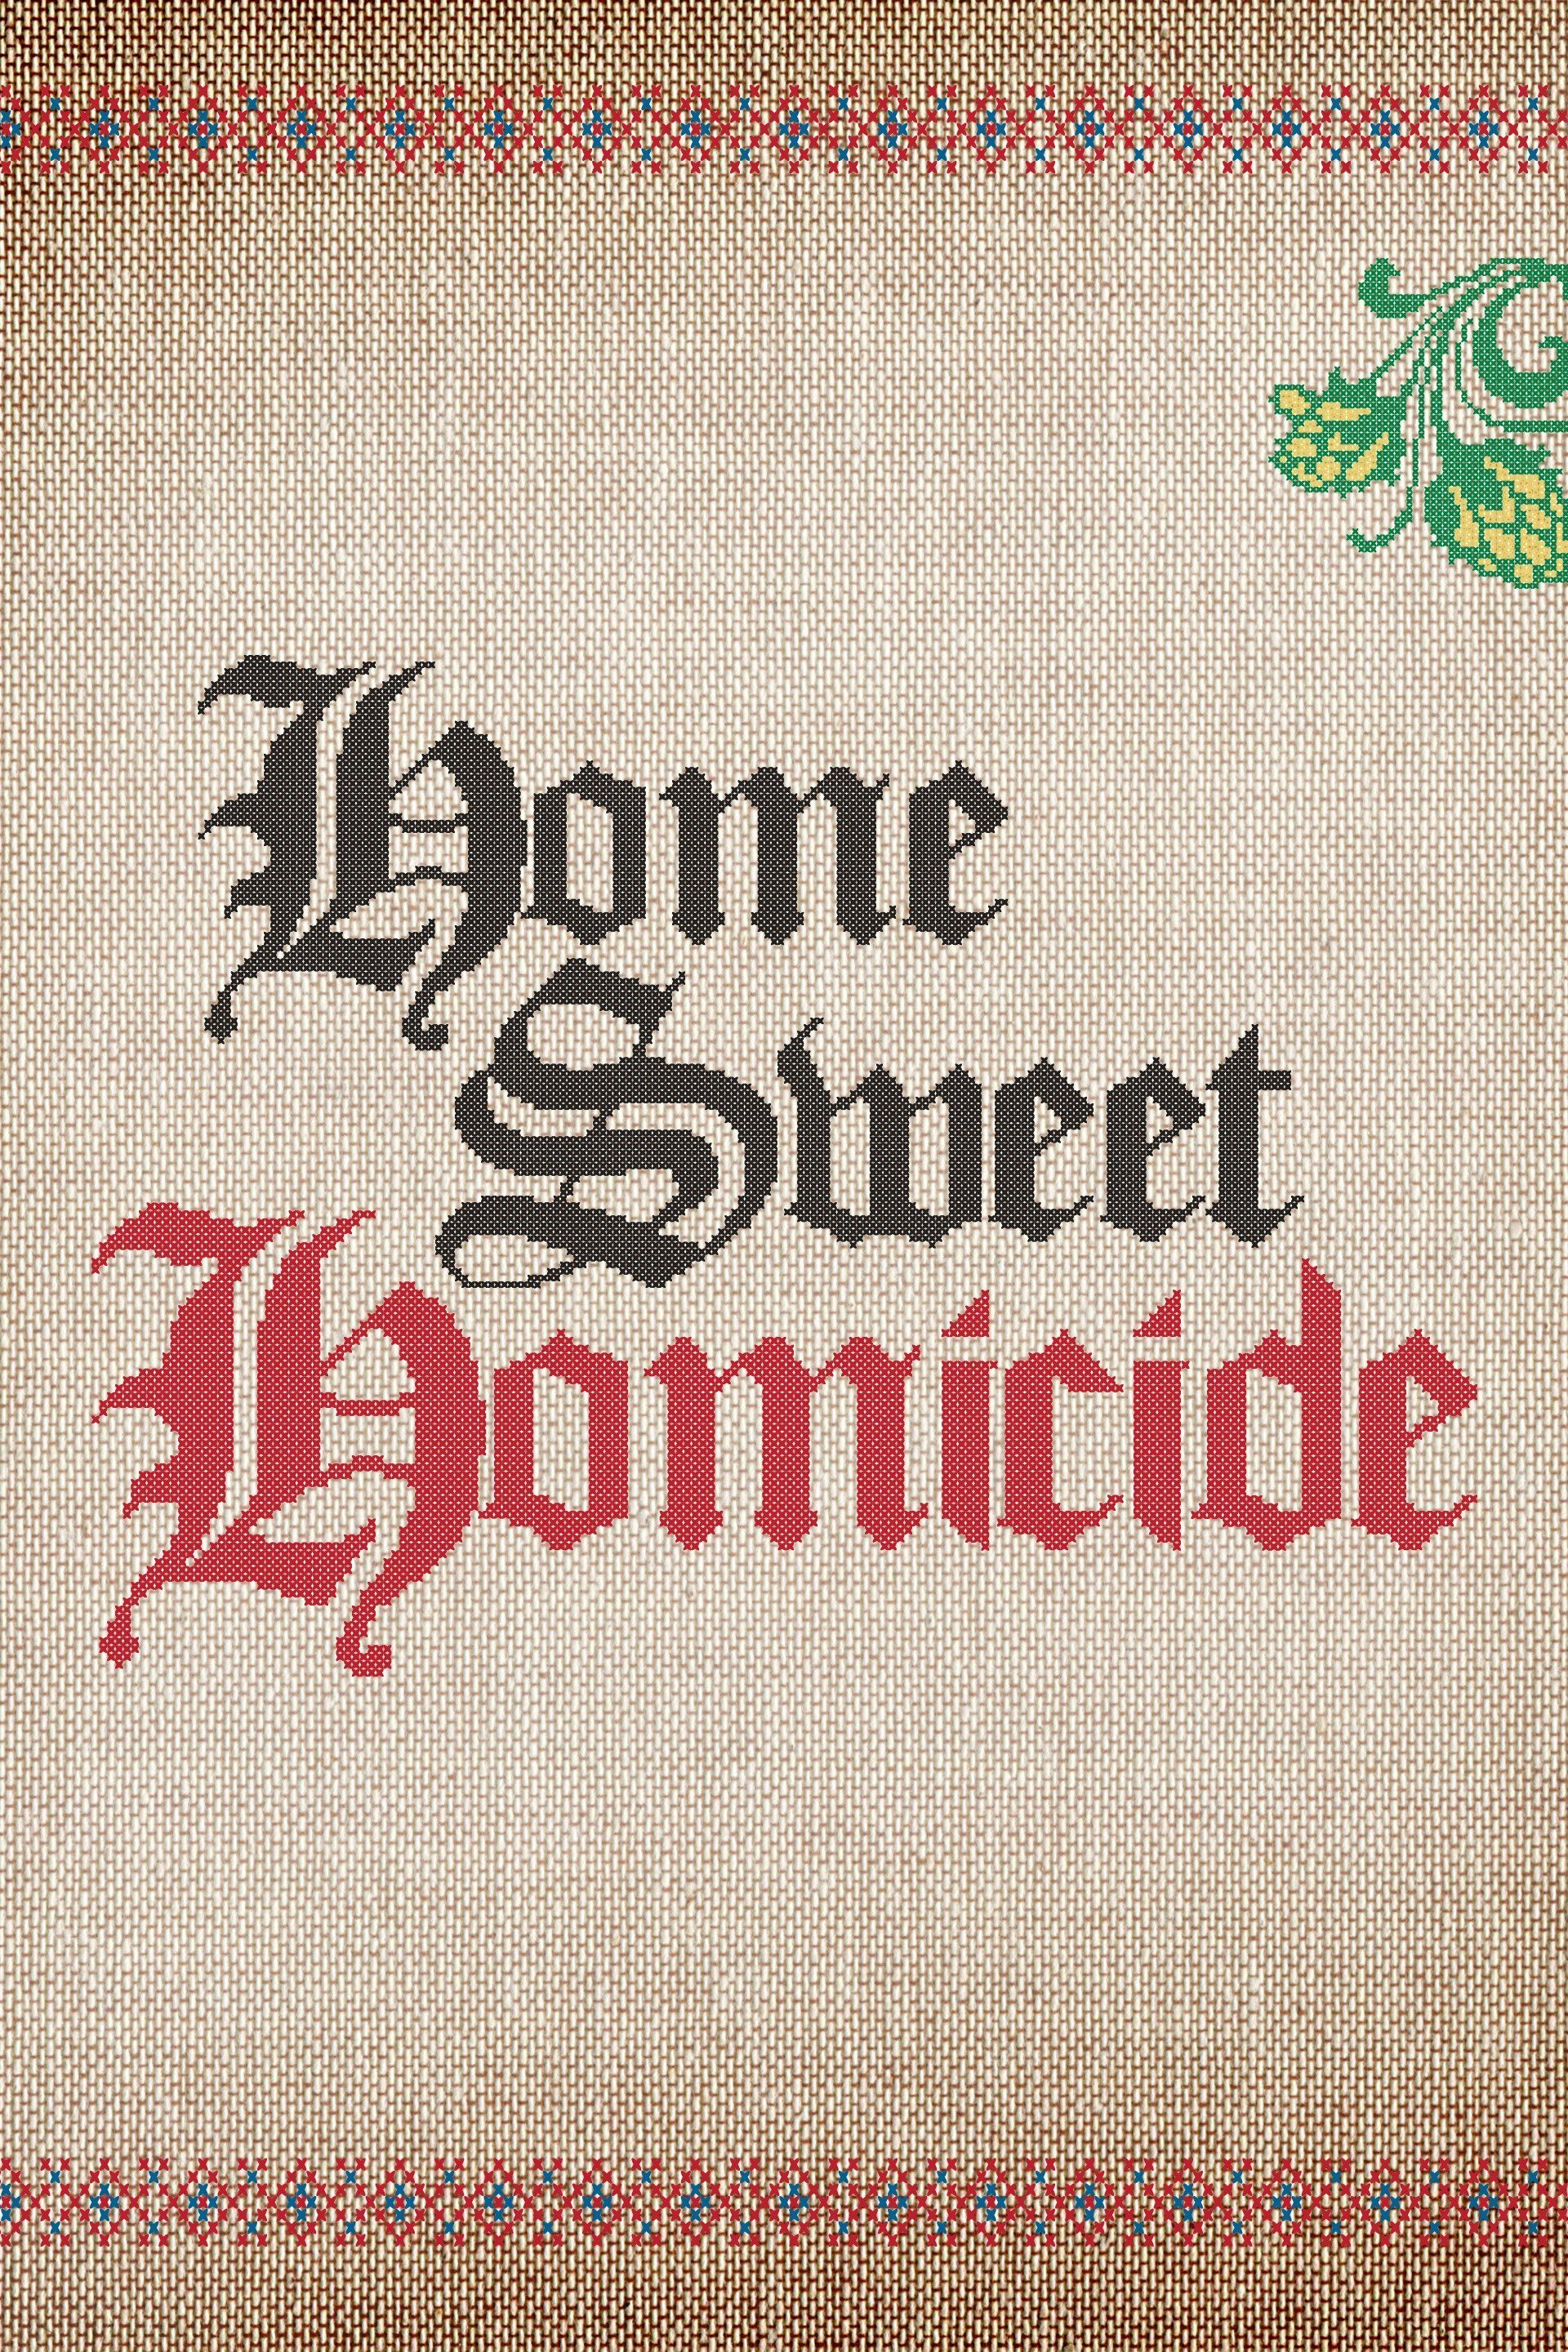 Home Sweet Homicide ne zaman